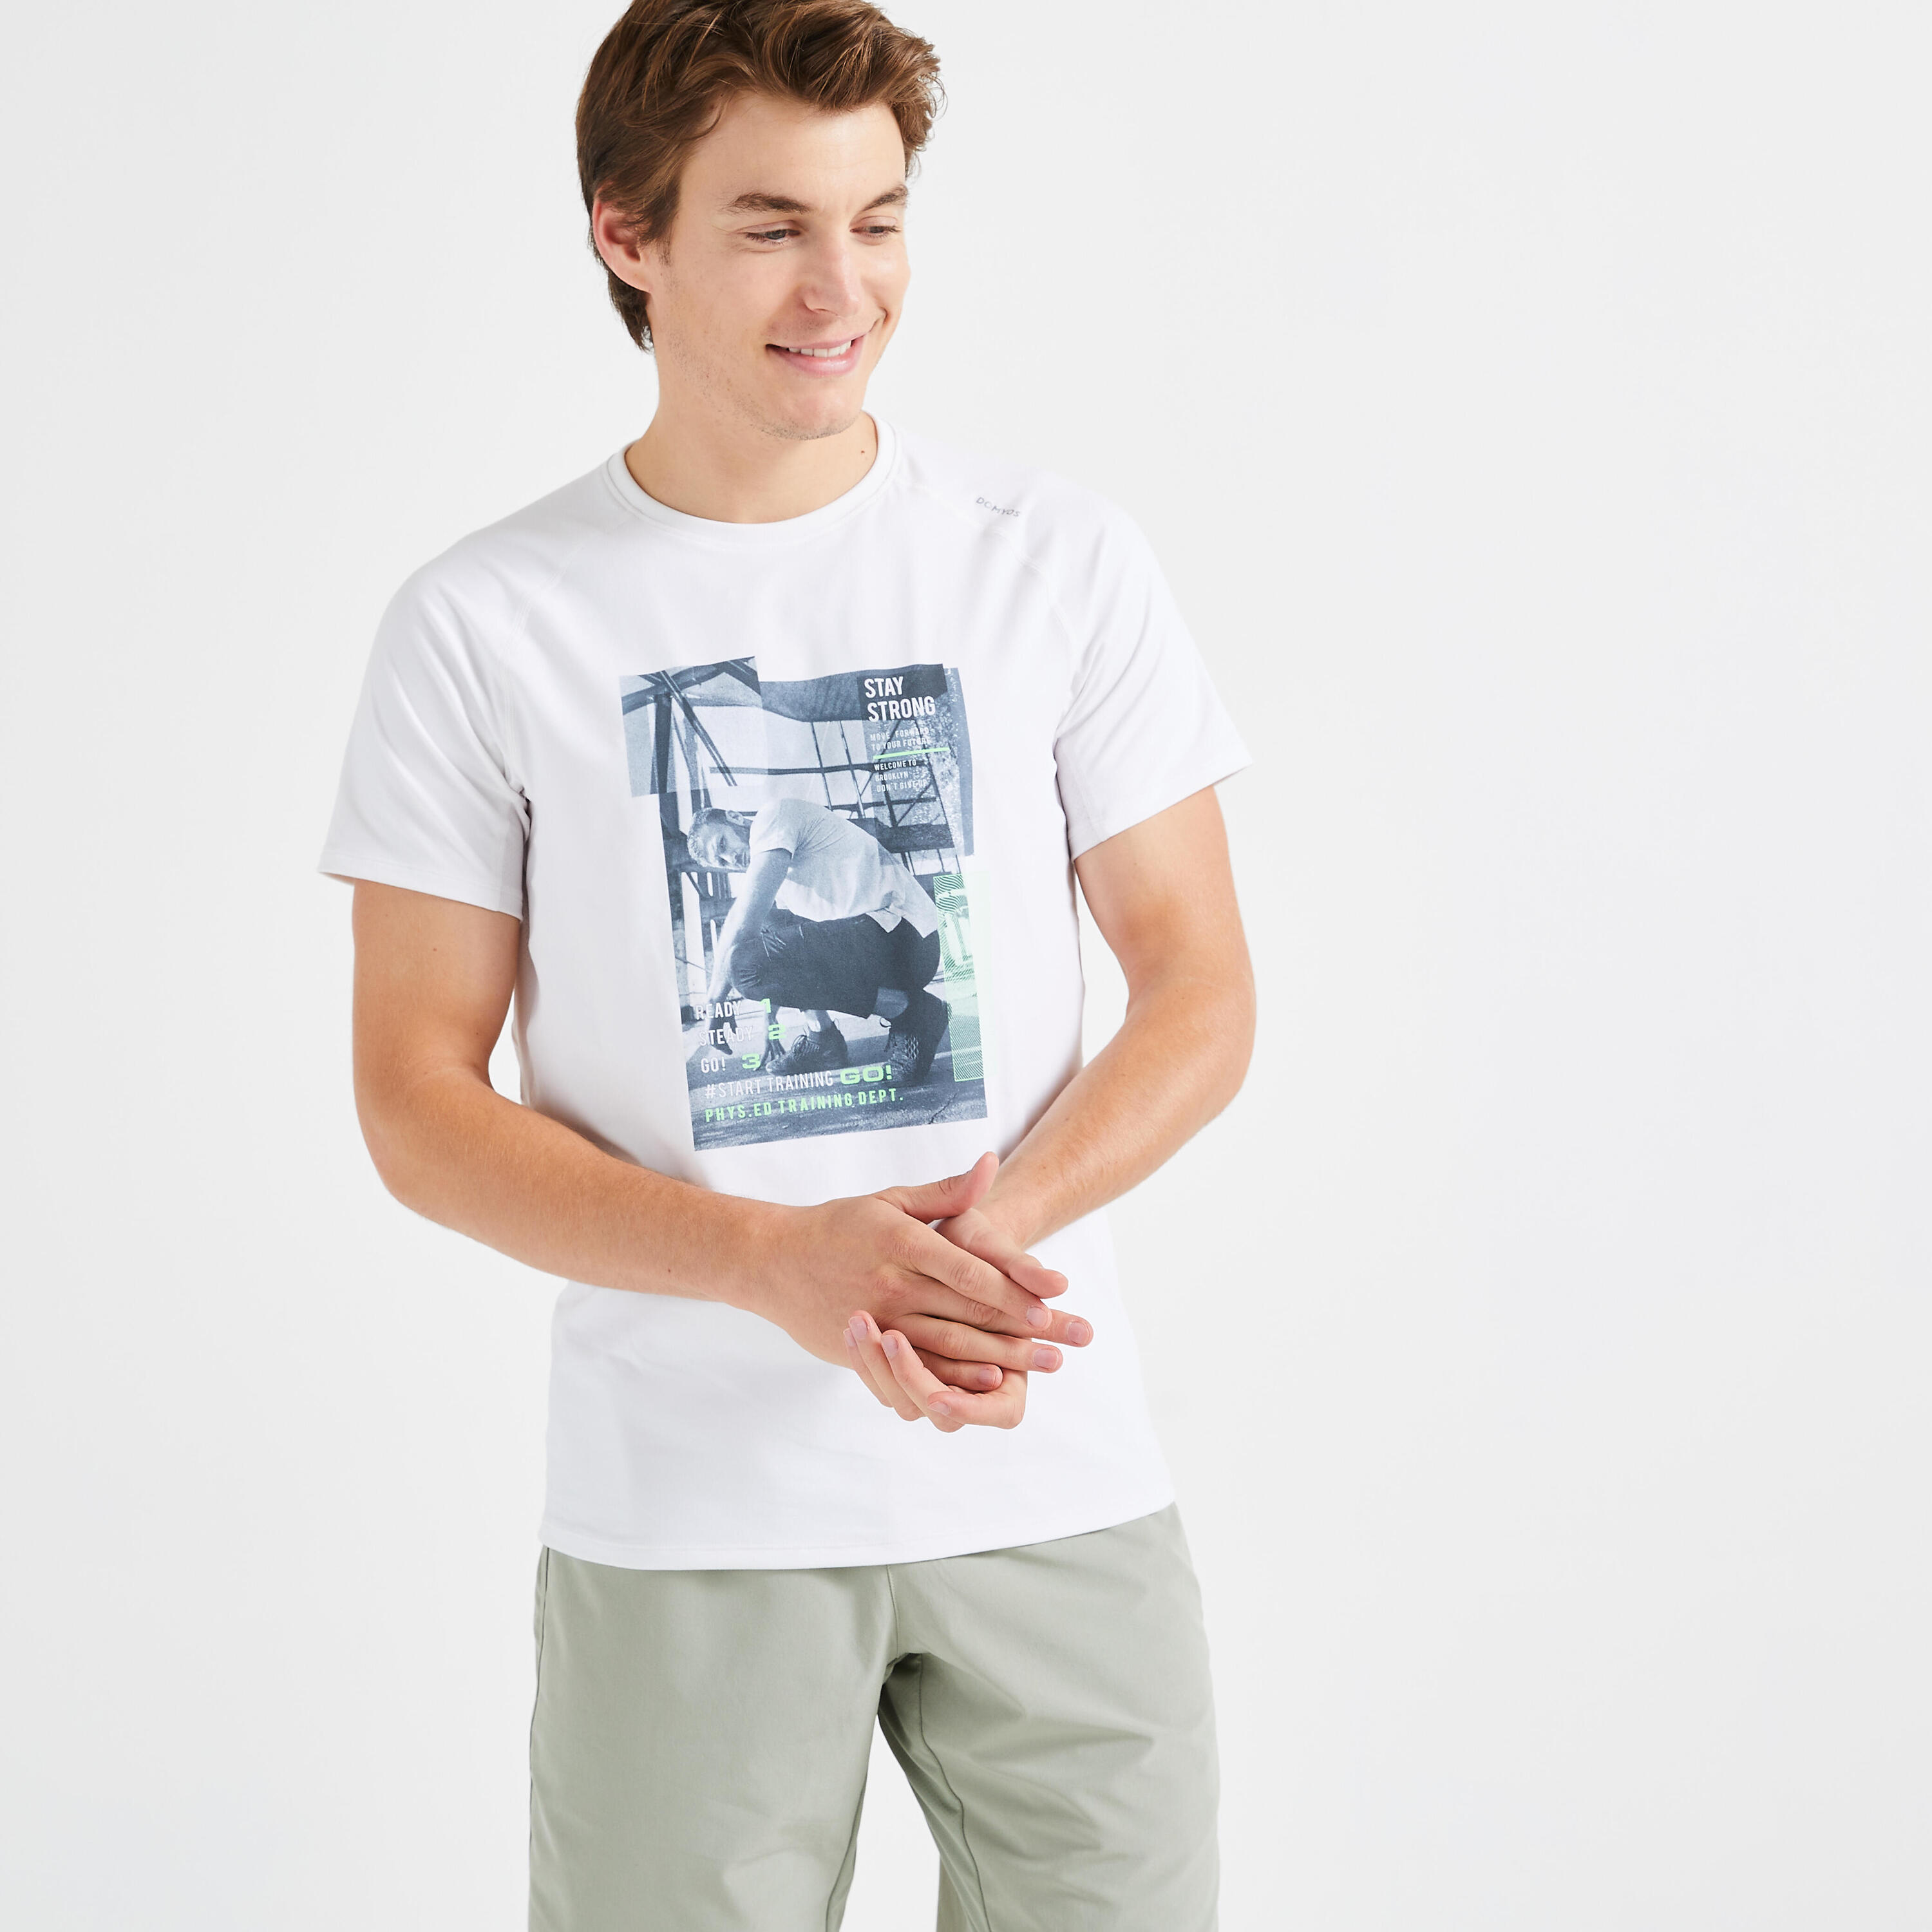 DOMYOS Men's Crew Neck Breathable Essential Fitness T-Shirt - White/Print